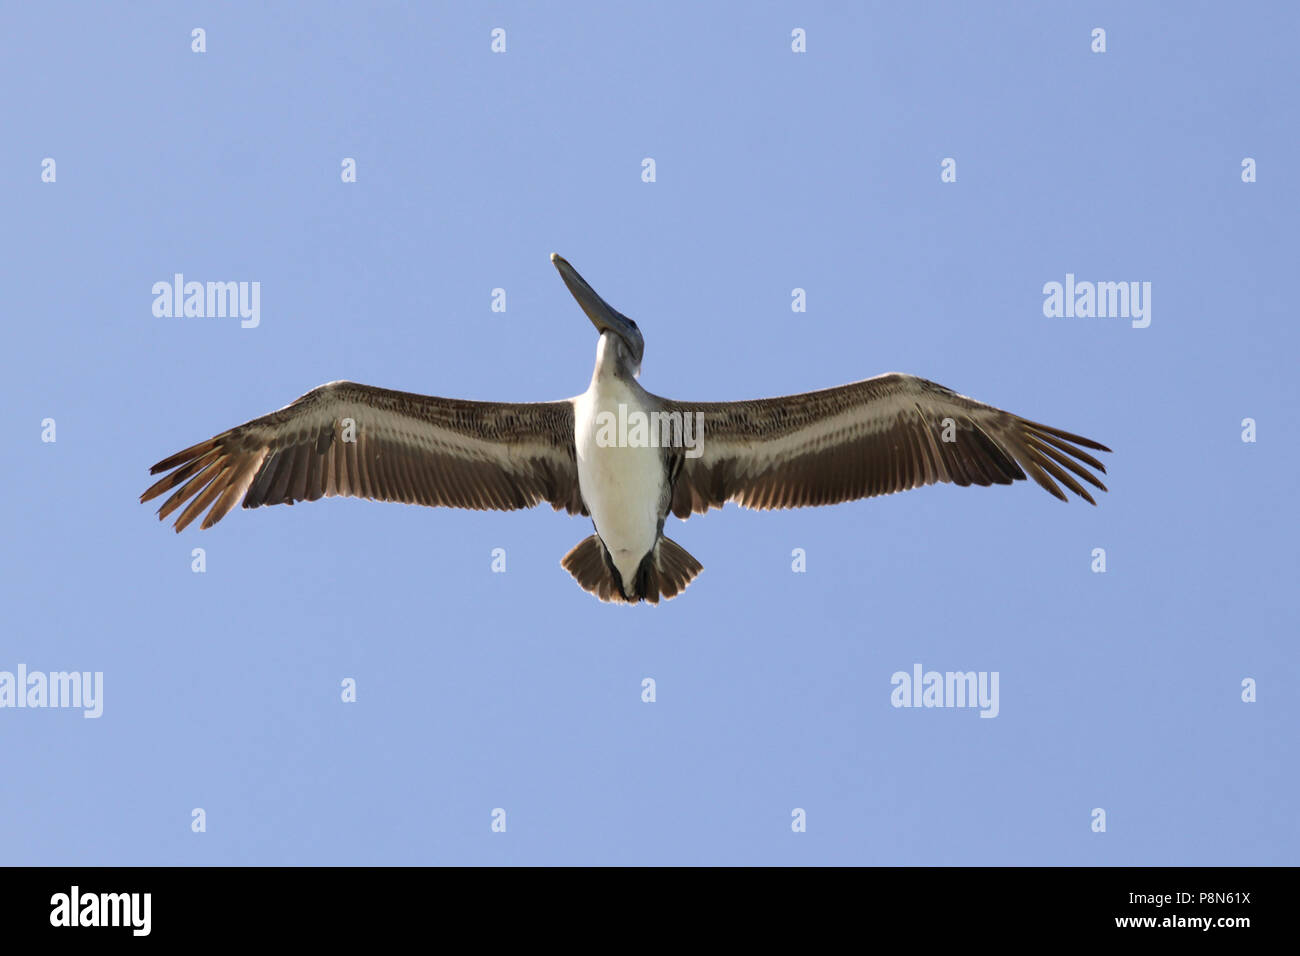 Flying pelican in Varadero Cuba Stock Photo